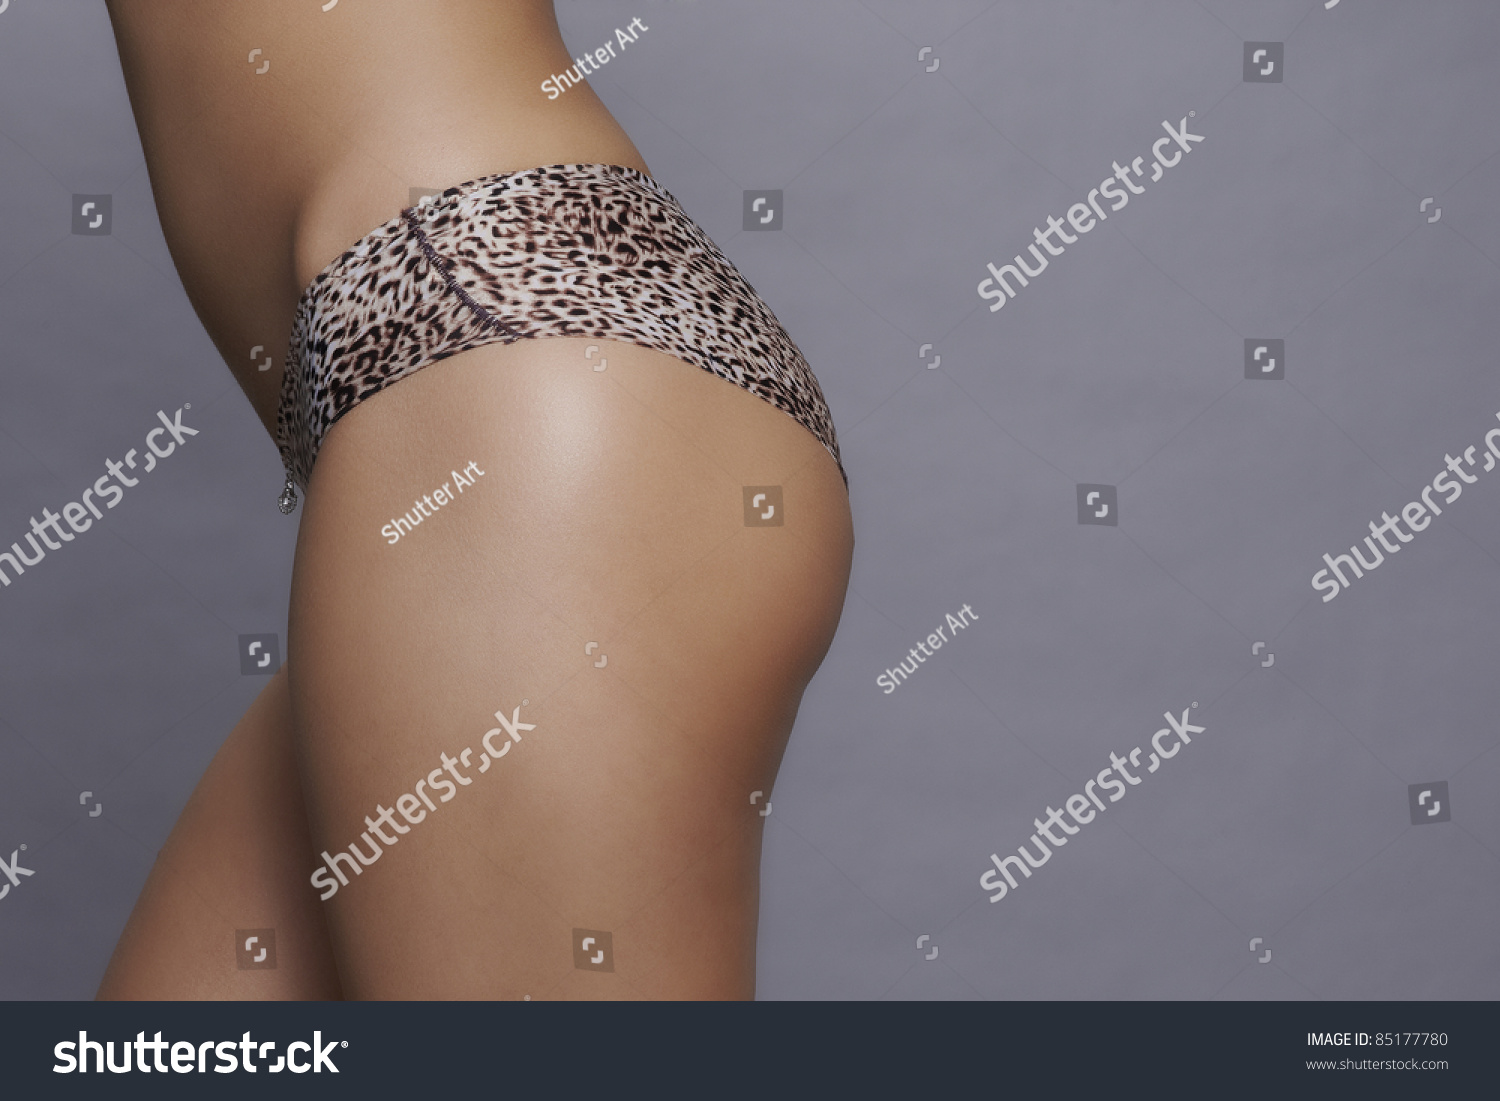 Beautiful Ass In Panties